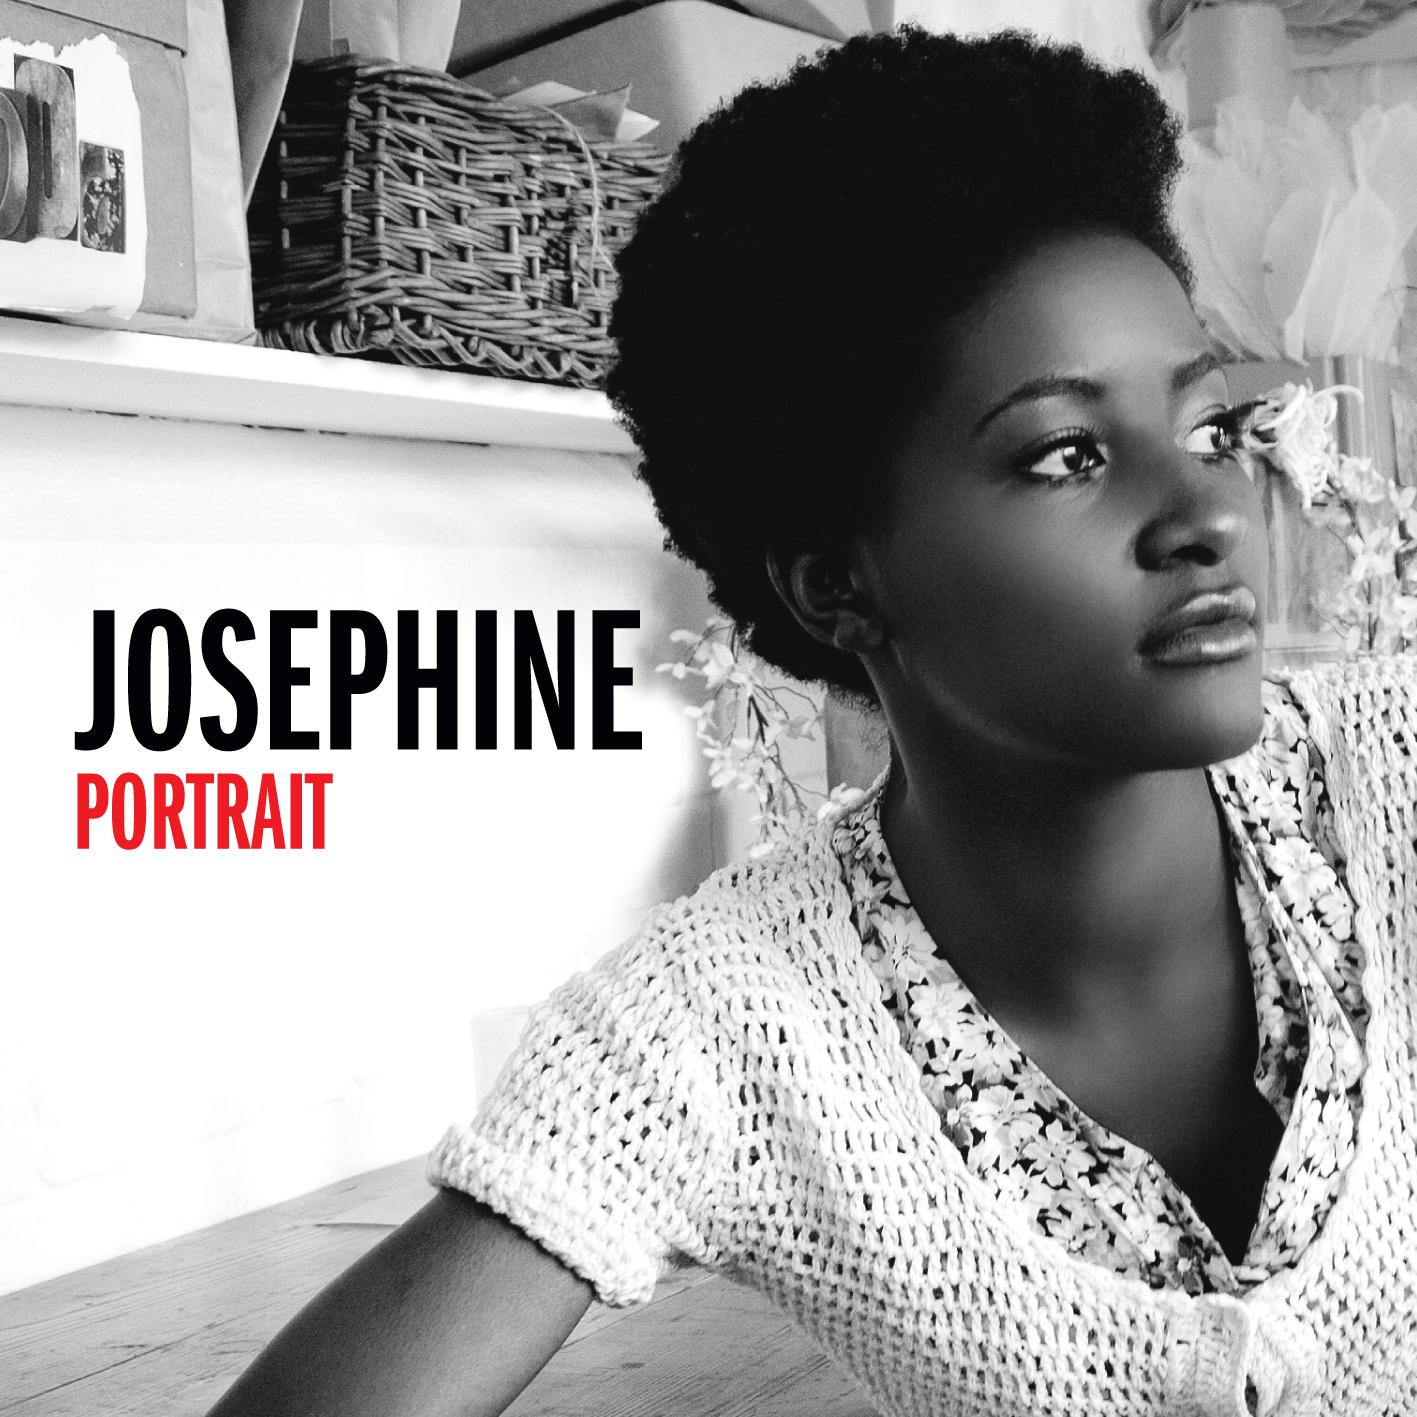 http://www.wepluggoodmusic.com/wp-content/uploads/2012/12/josephine-portrait.jpeg